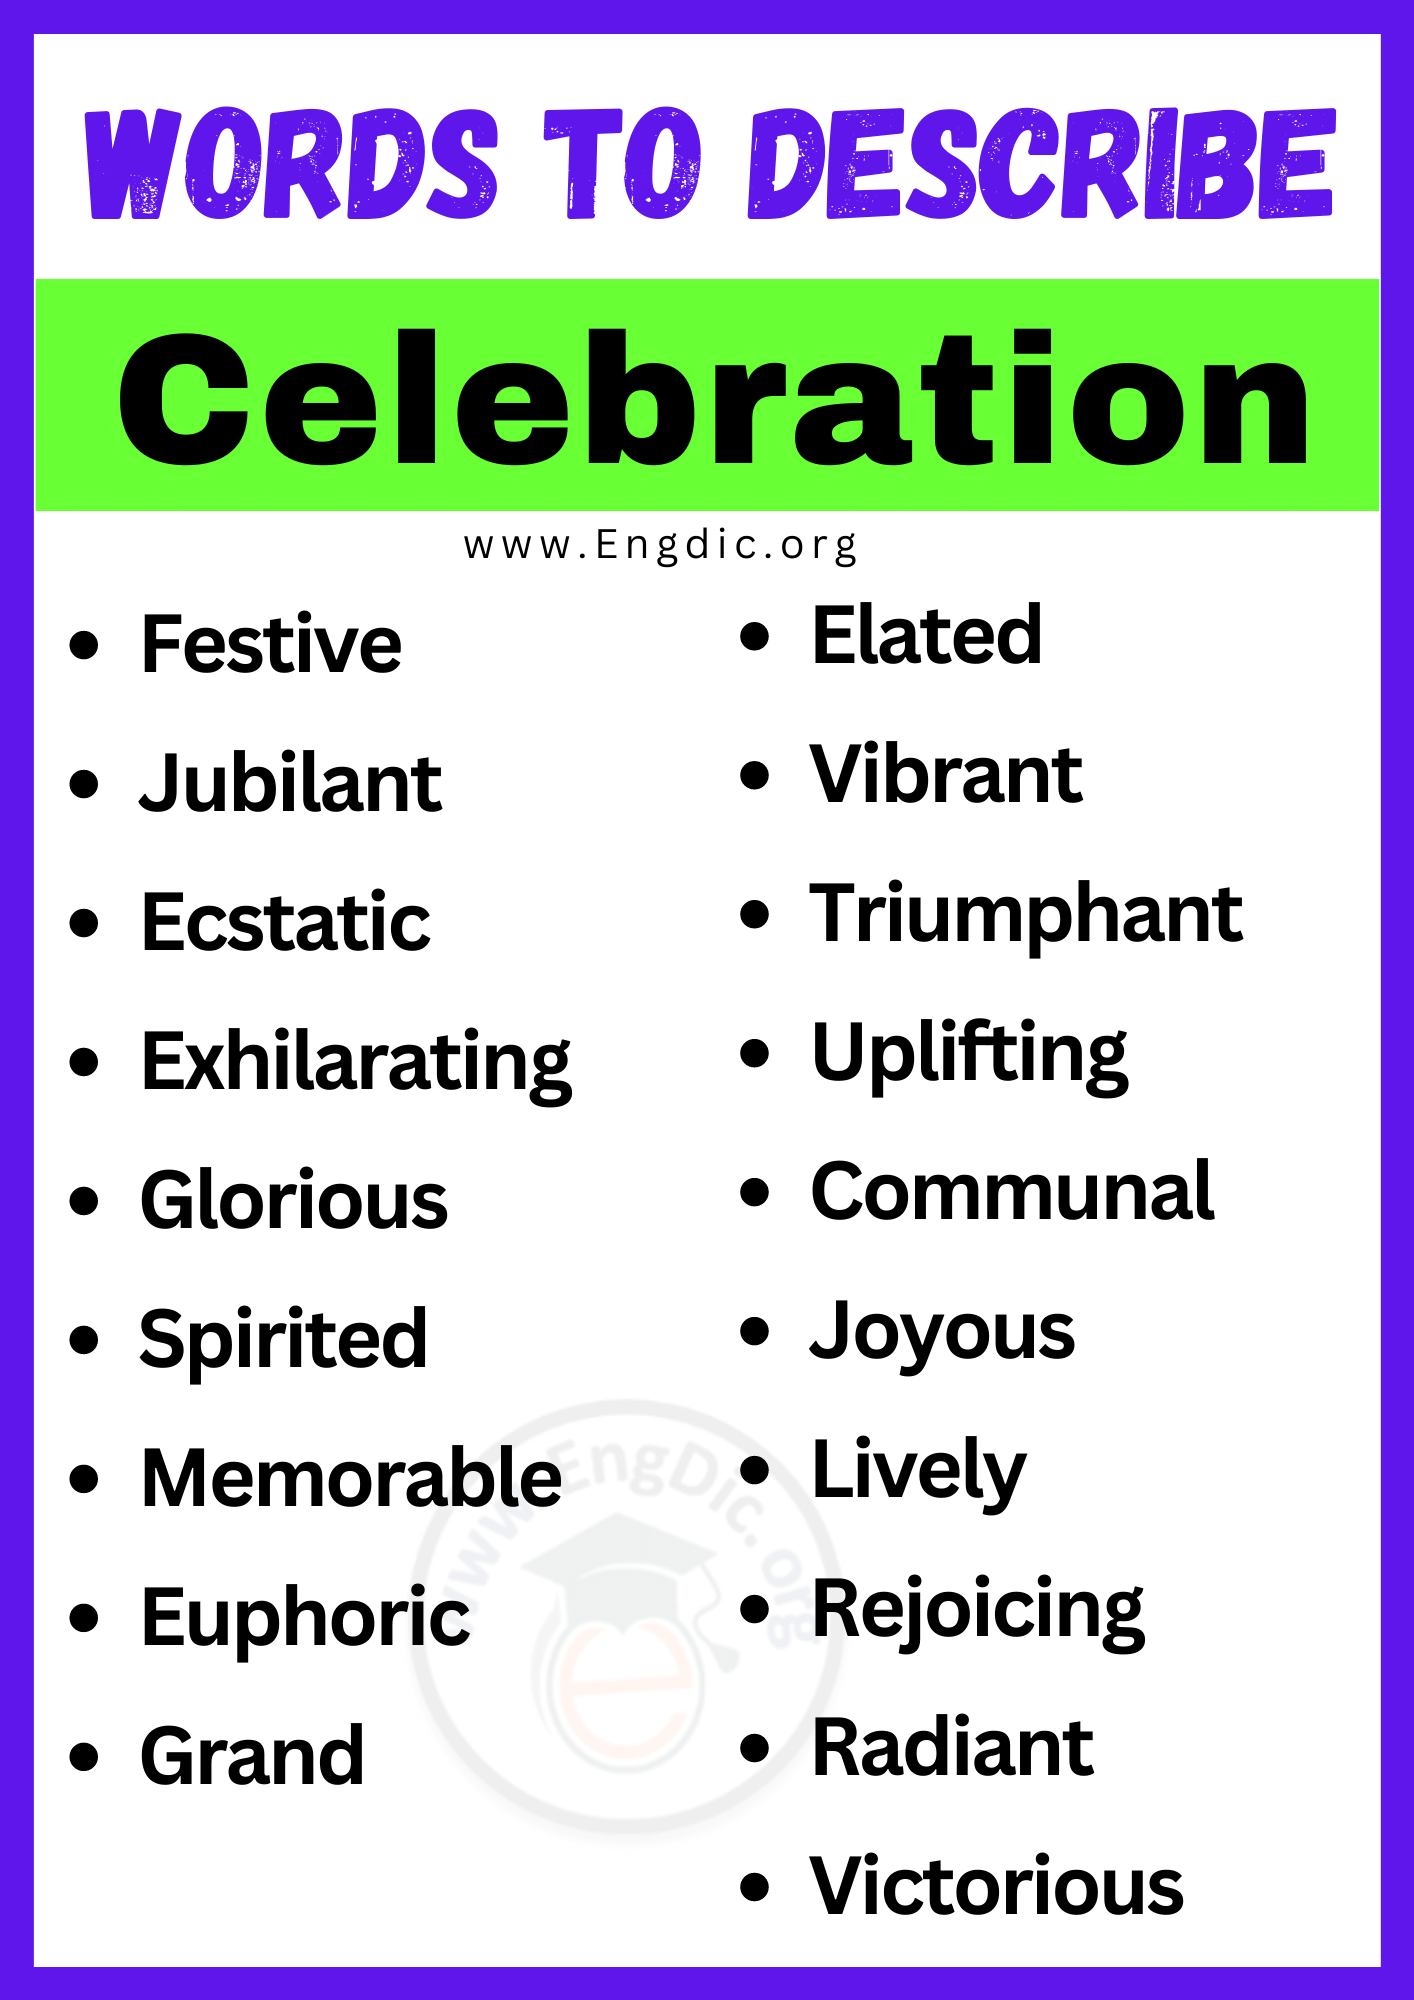 Words to Describe Celebration